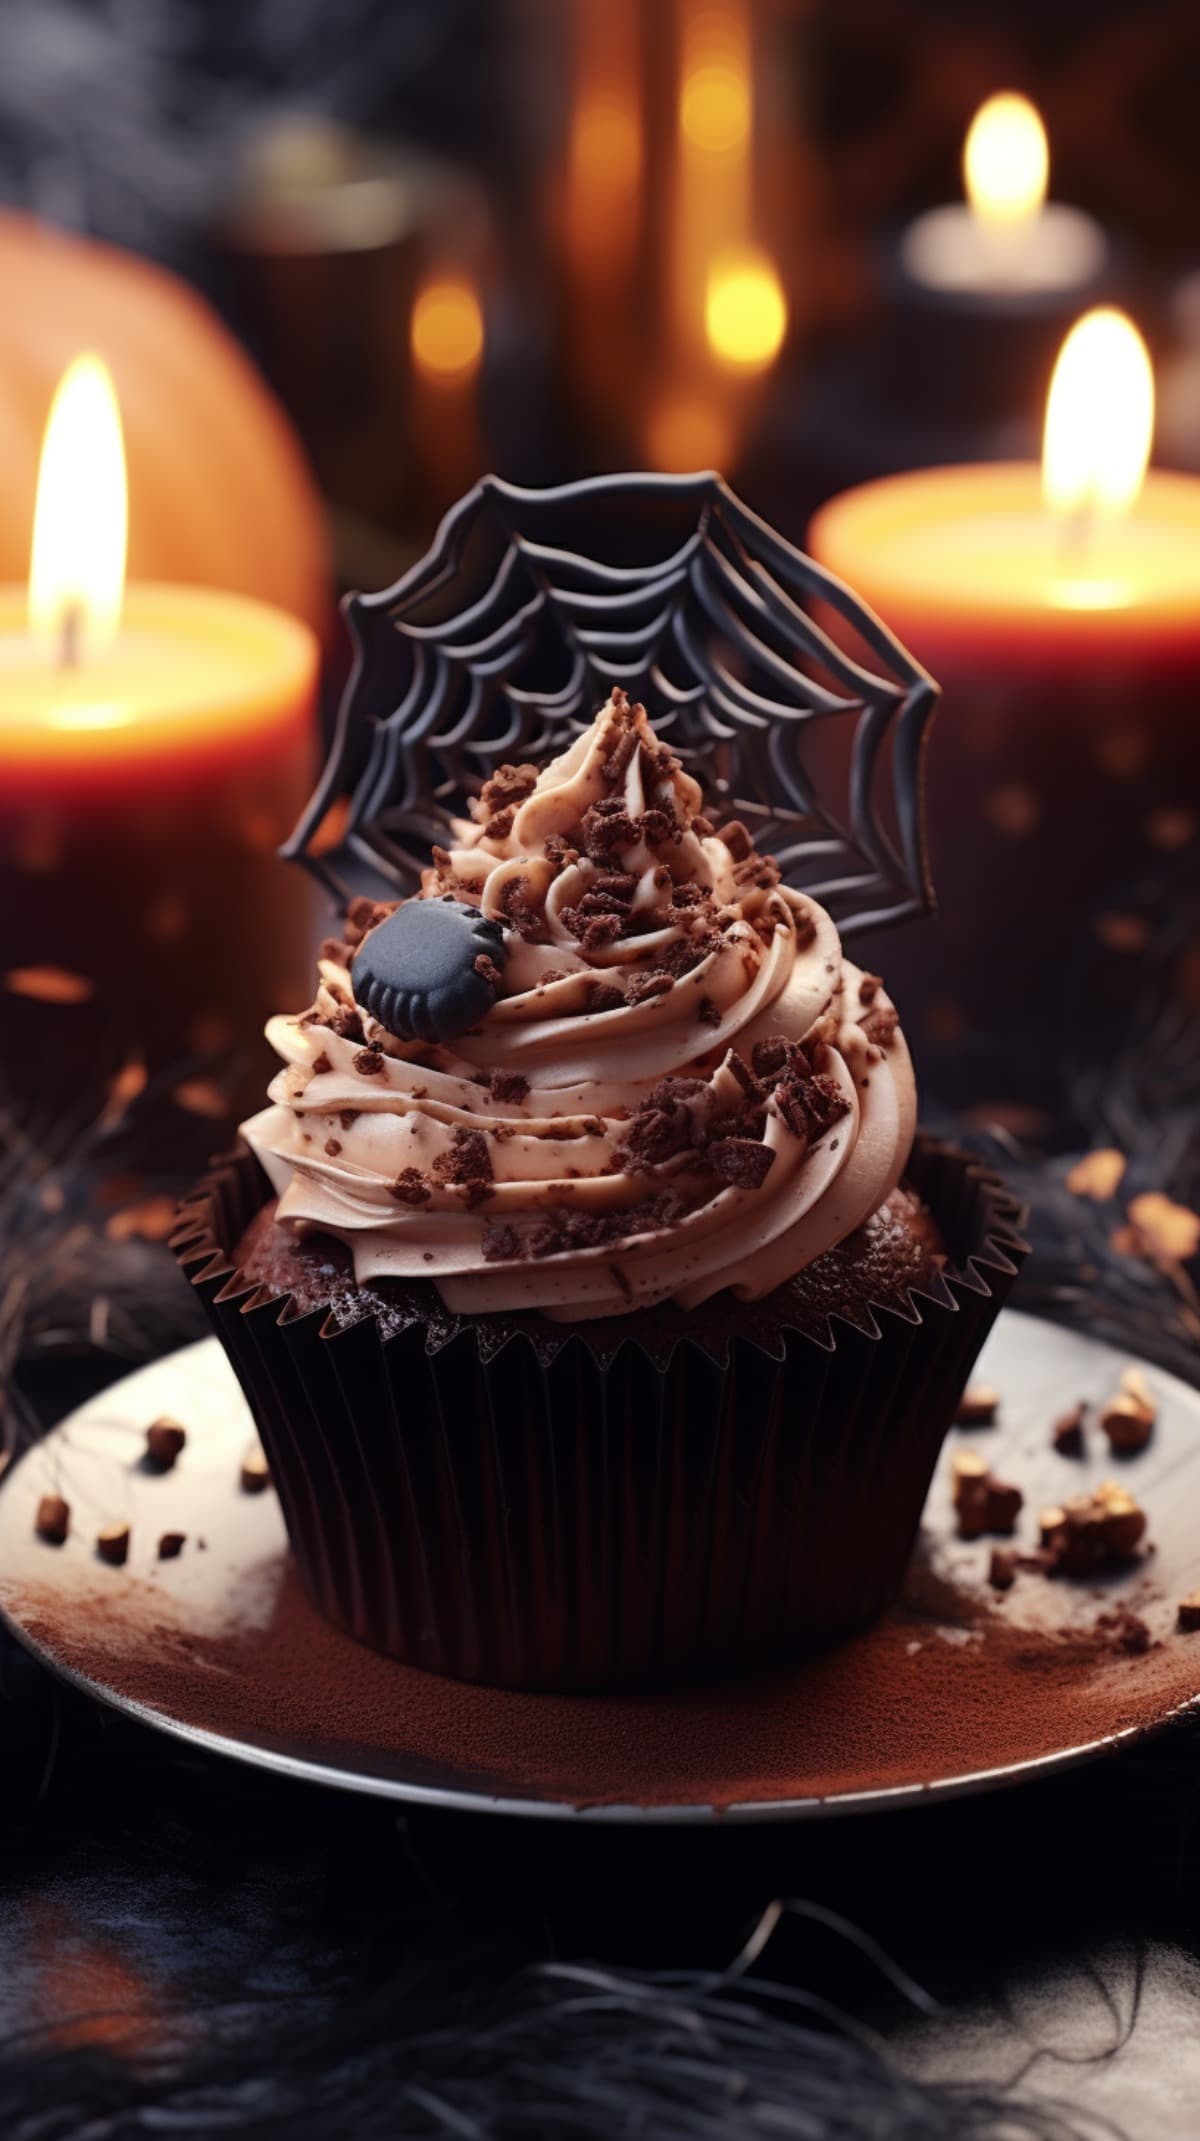 Halloween Cupcake with chocolate spider web